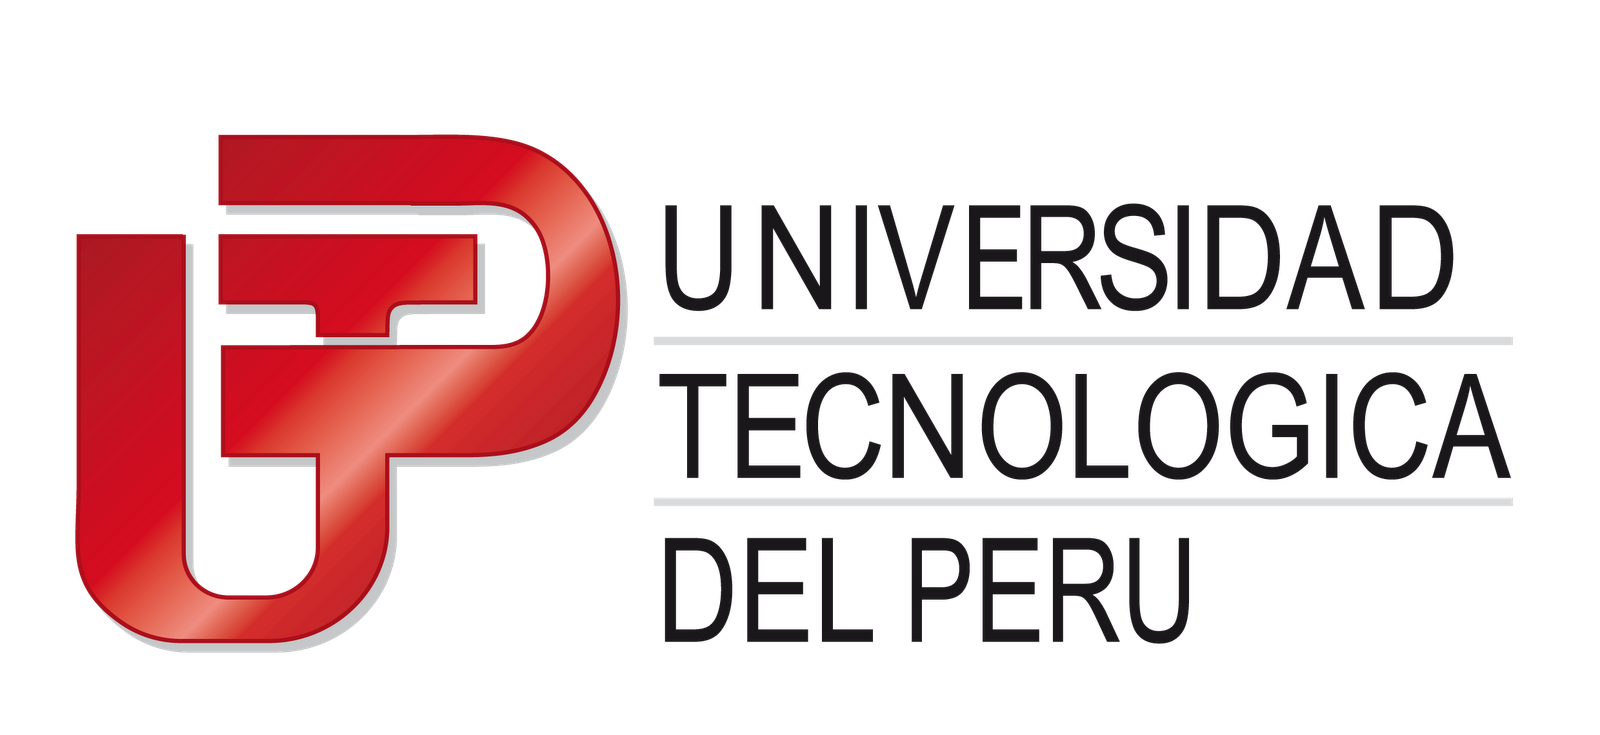 UTP Universidad Tecnologica del peru Logo photo - 1